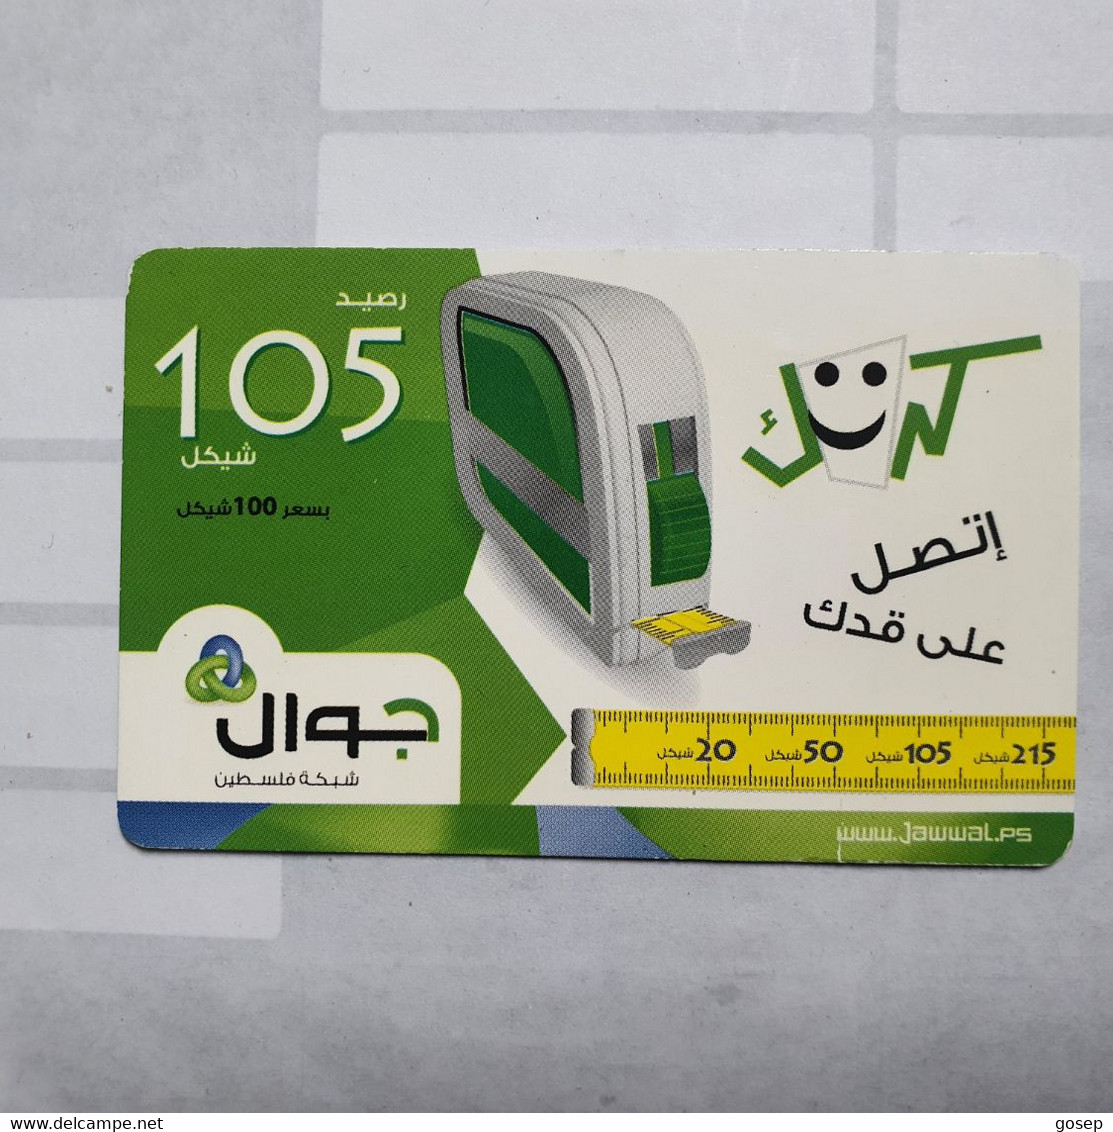 PALESTINE-(PA-G-0031)-My Card-(81)-(105units)-(1348144300271)-(1/1/2012)-used Card-1 Prepiad Free - Palestine